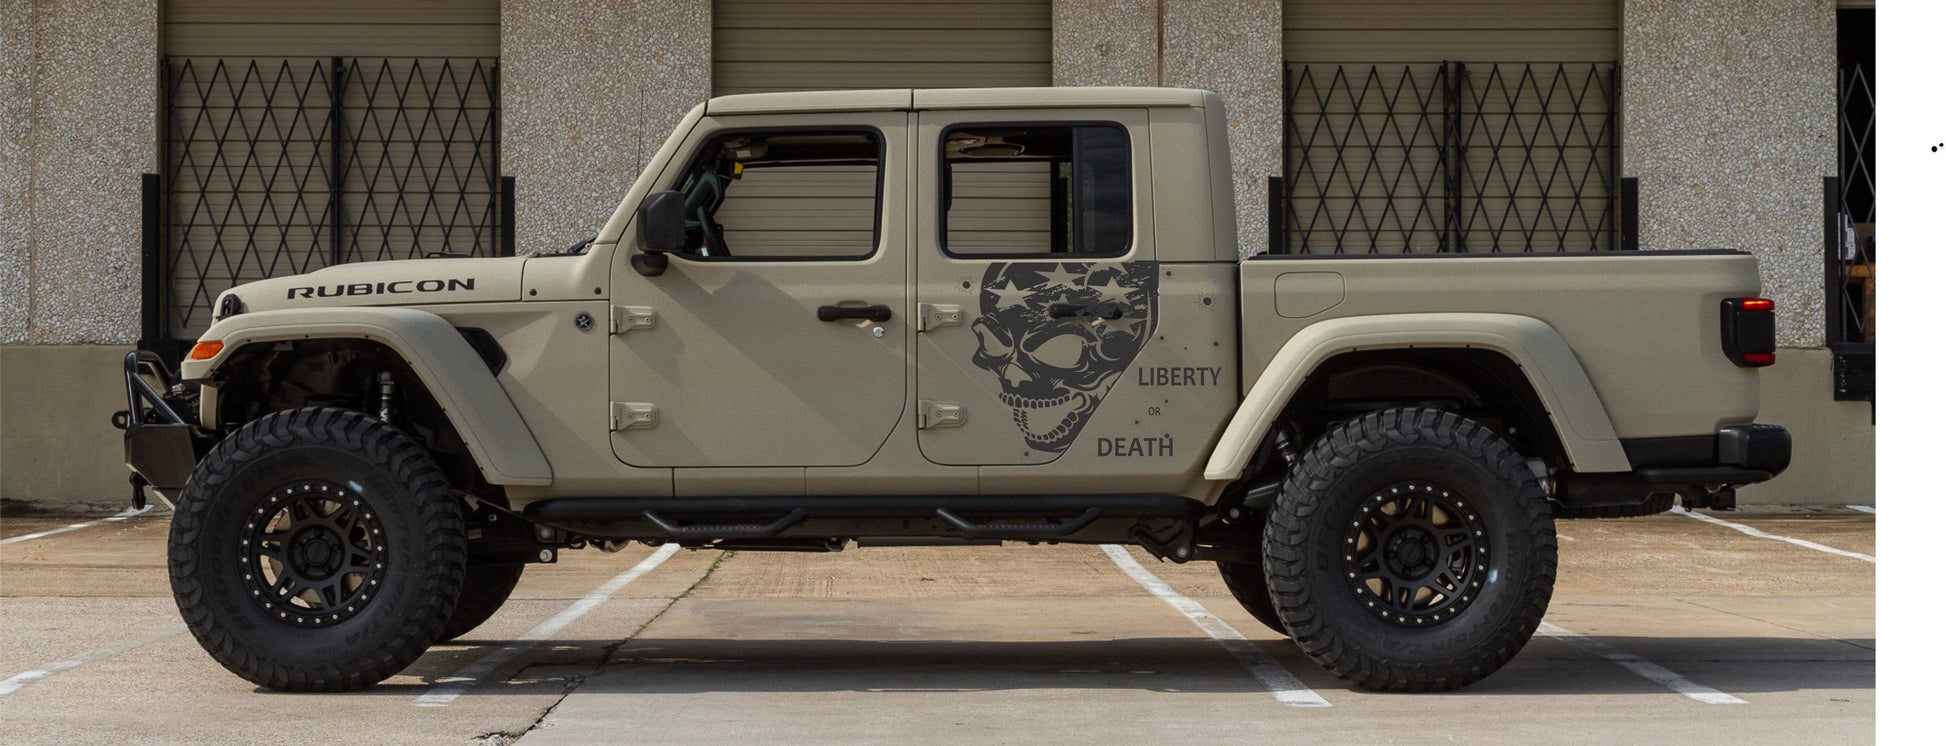 Set of American Flag Patriotism Patriots Inspired Skull Punisher "LIBERTY OR DEATH" Side Door Decals For Jeep Gladiator Trucks